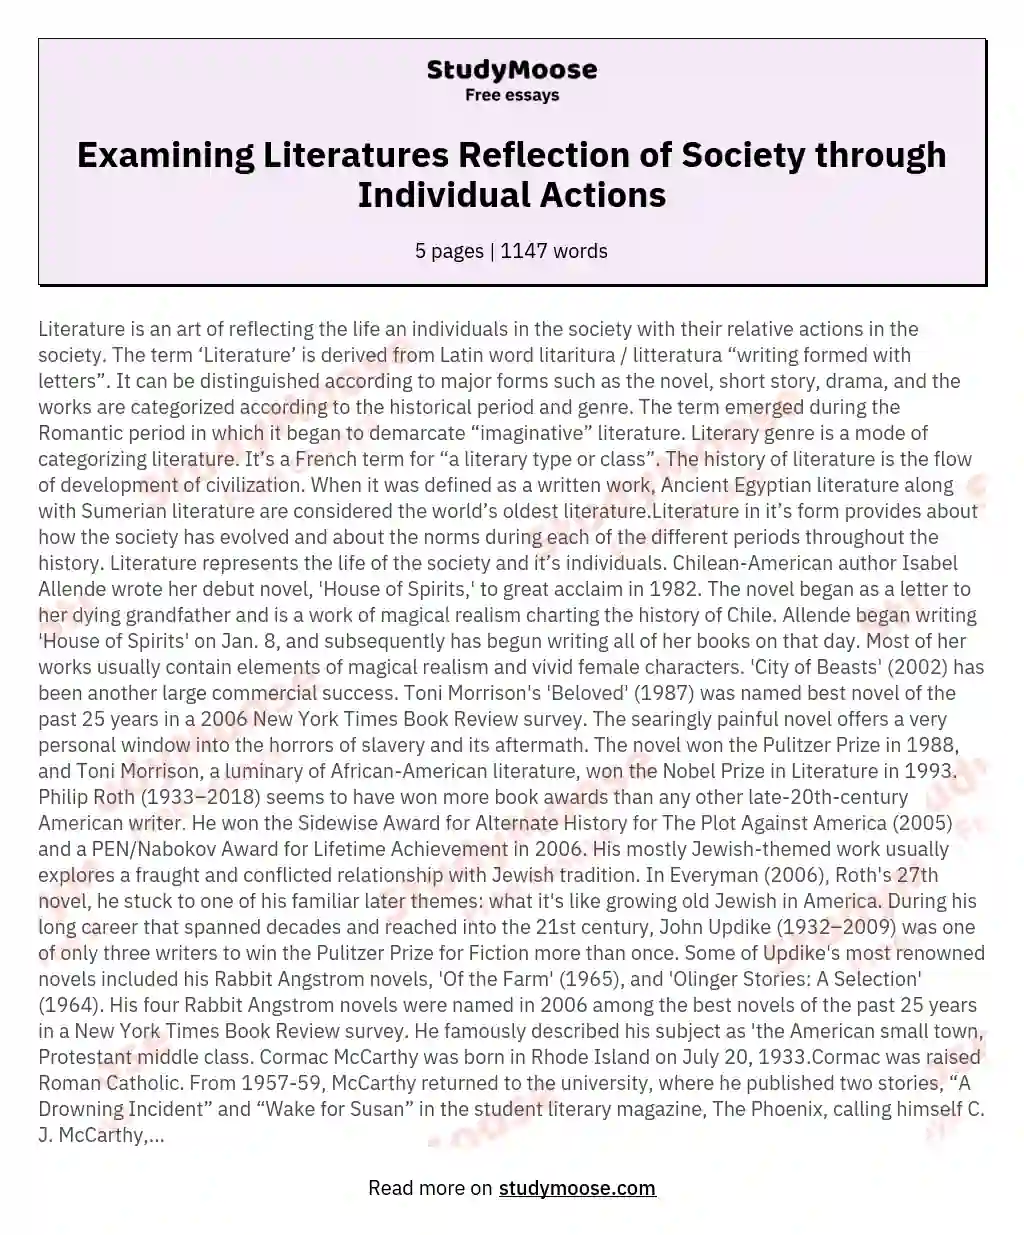 Examining Literatures Reflection of Society through Individual Actions essay